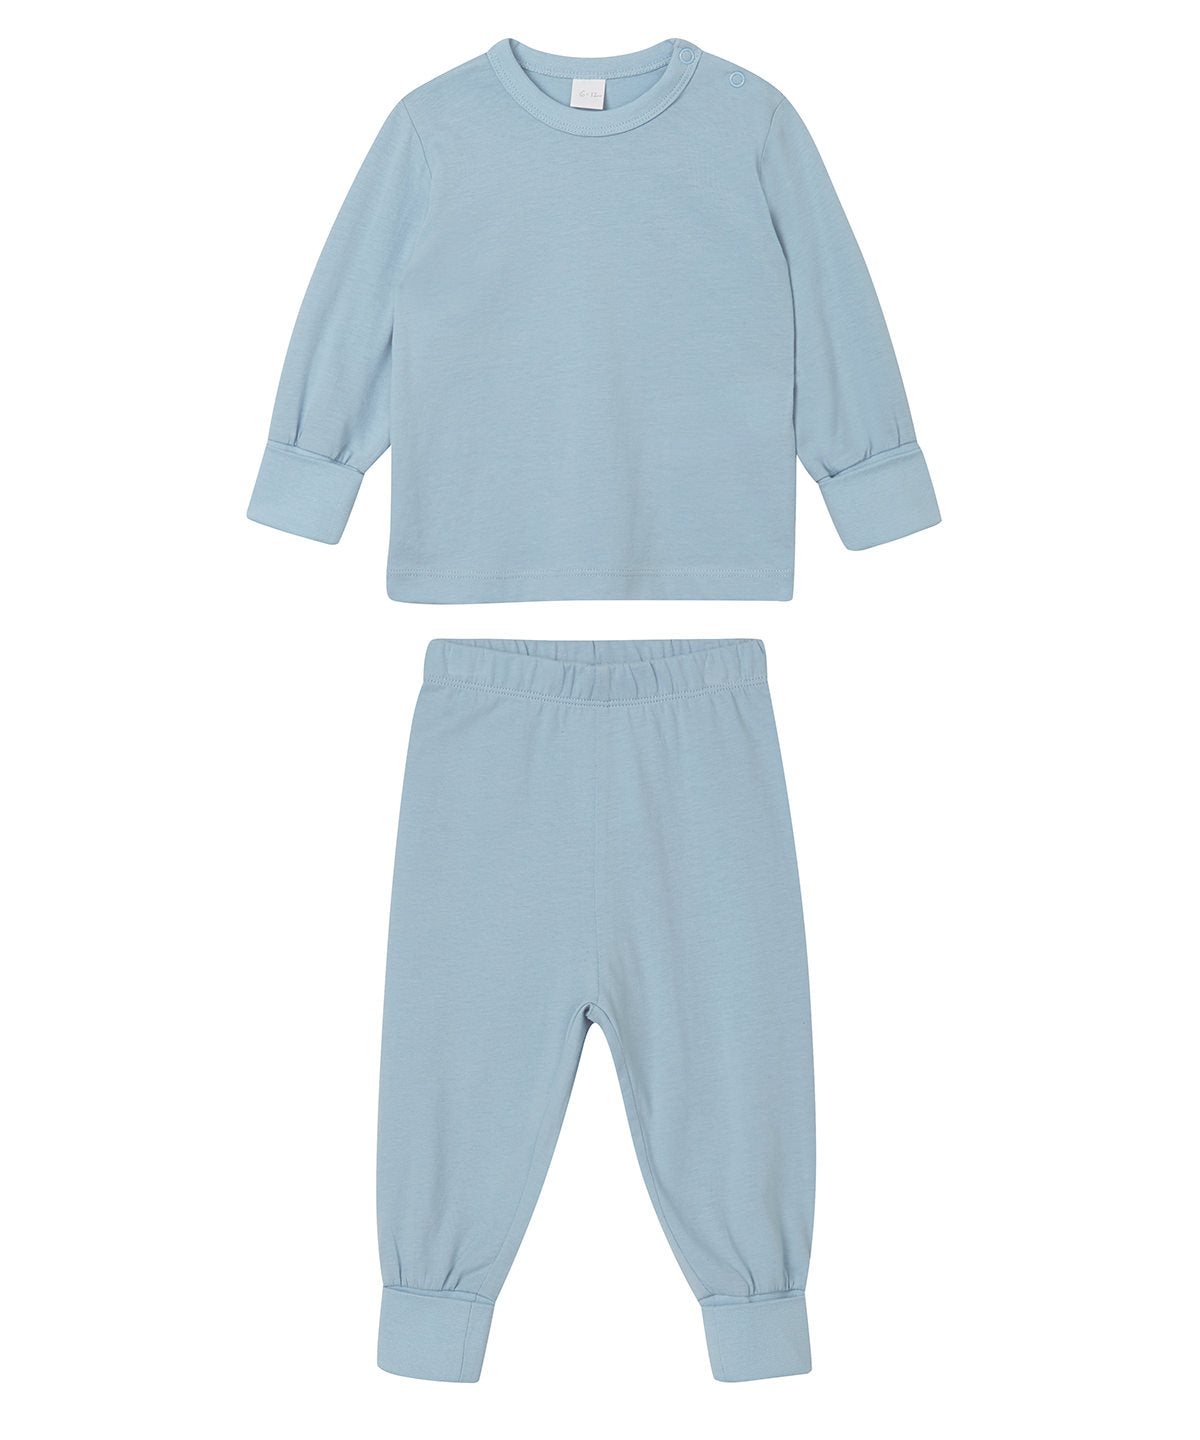 Personalised Pyjamas - Light Blue Babybugz Baby pyjamas